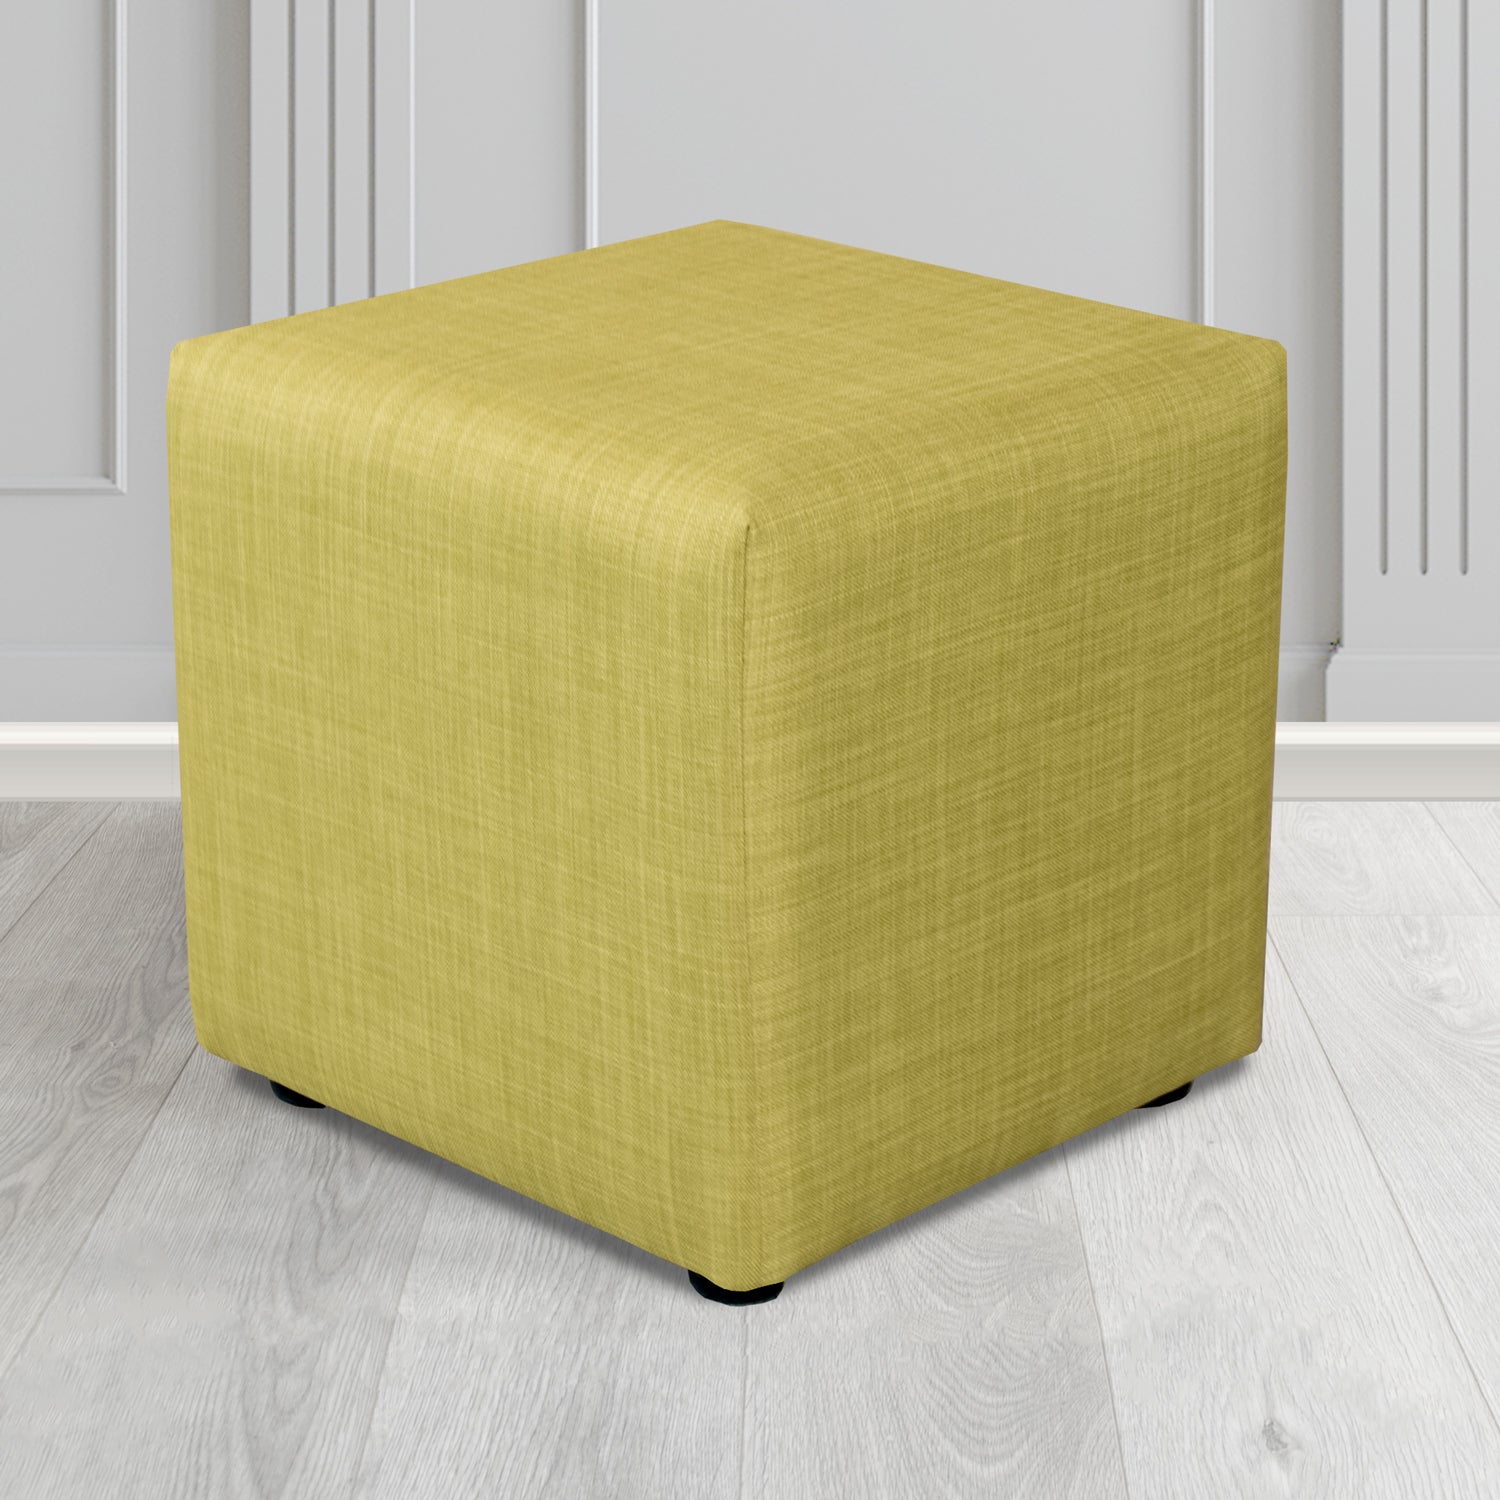 Paris Charles Olive Plain Linen Fabric Cube Footstool - The Tub Chair Shop